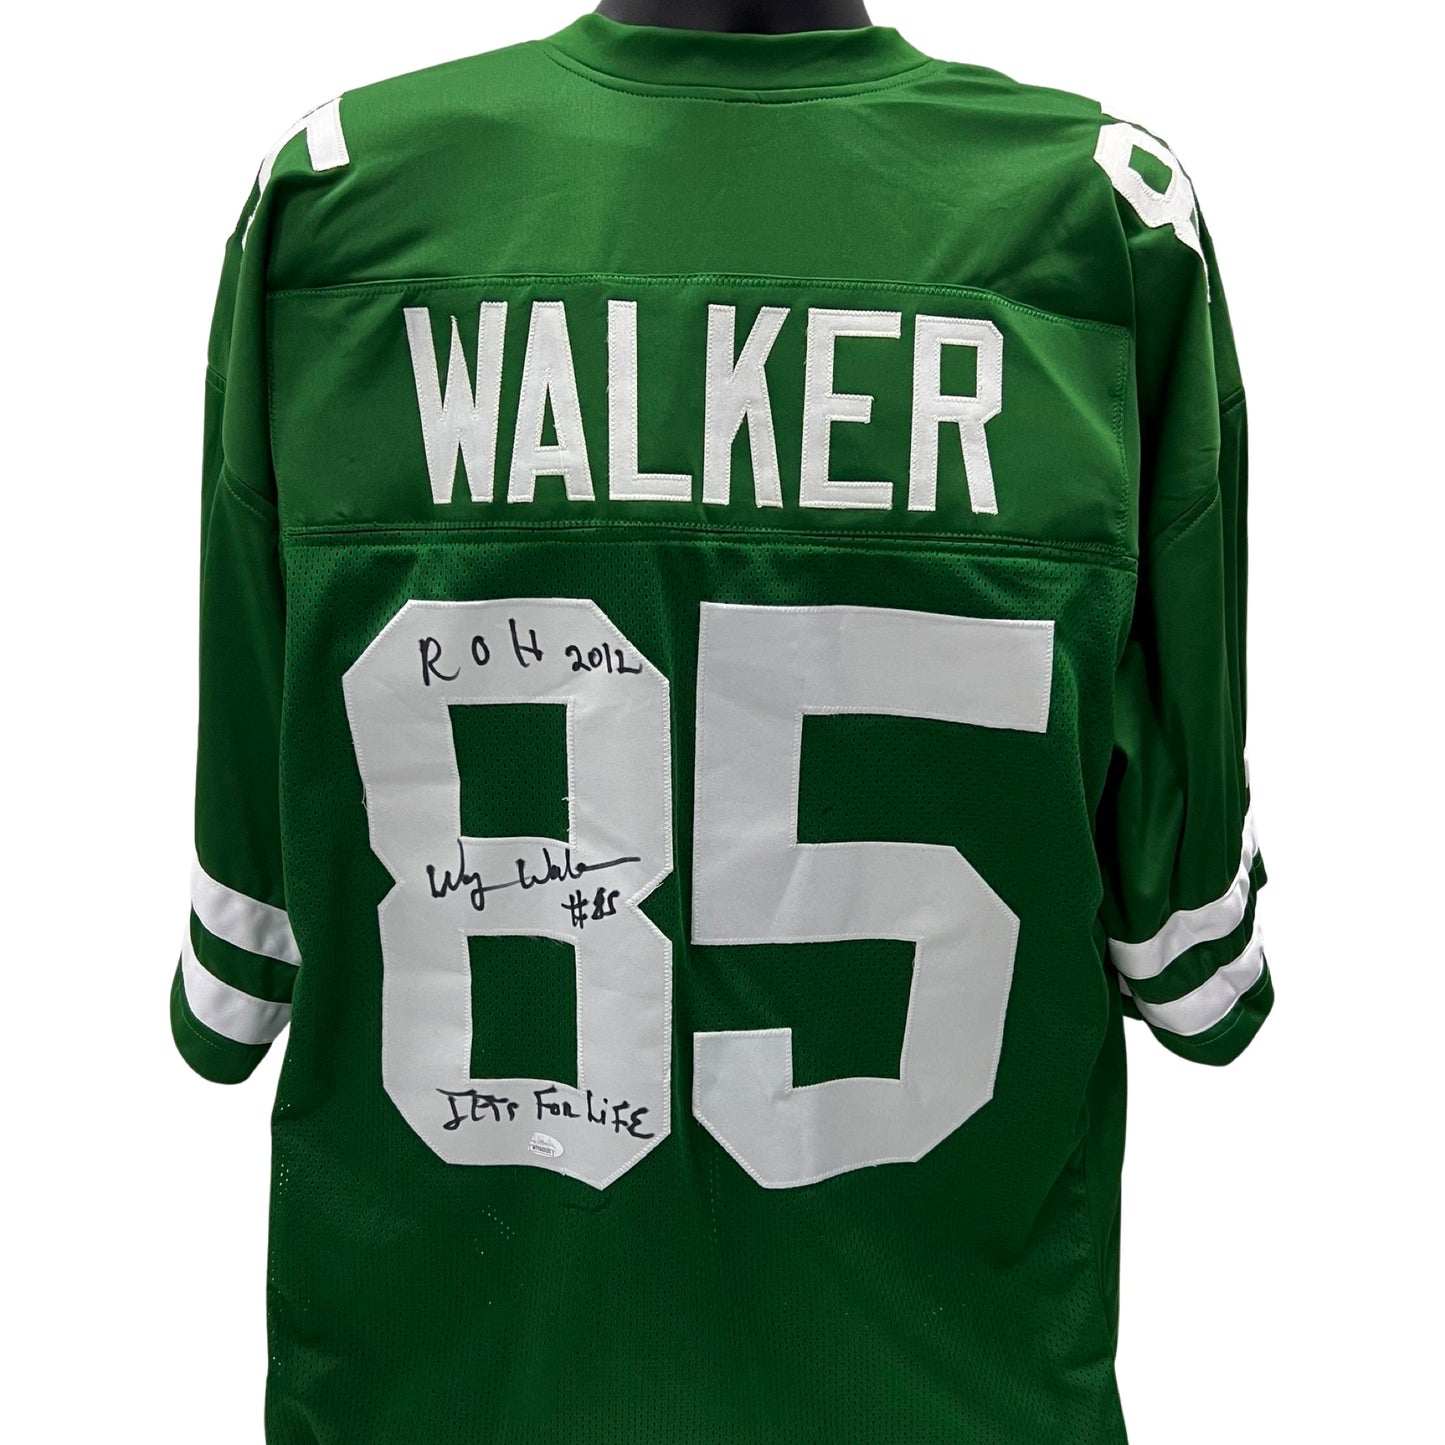 Wesley Walker Autographed New York Jets Green Jersey “ROH 2012, Jets for Life” Inscriptions JSA